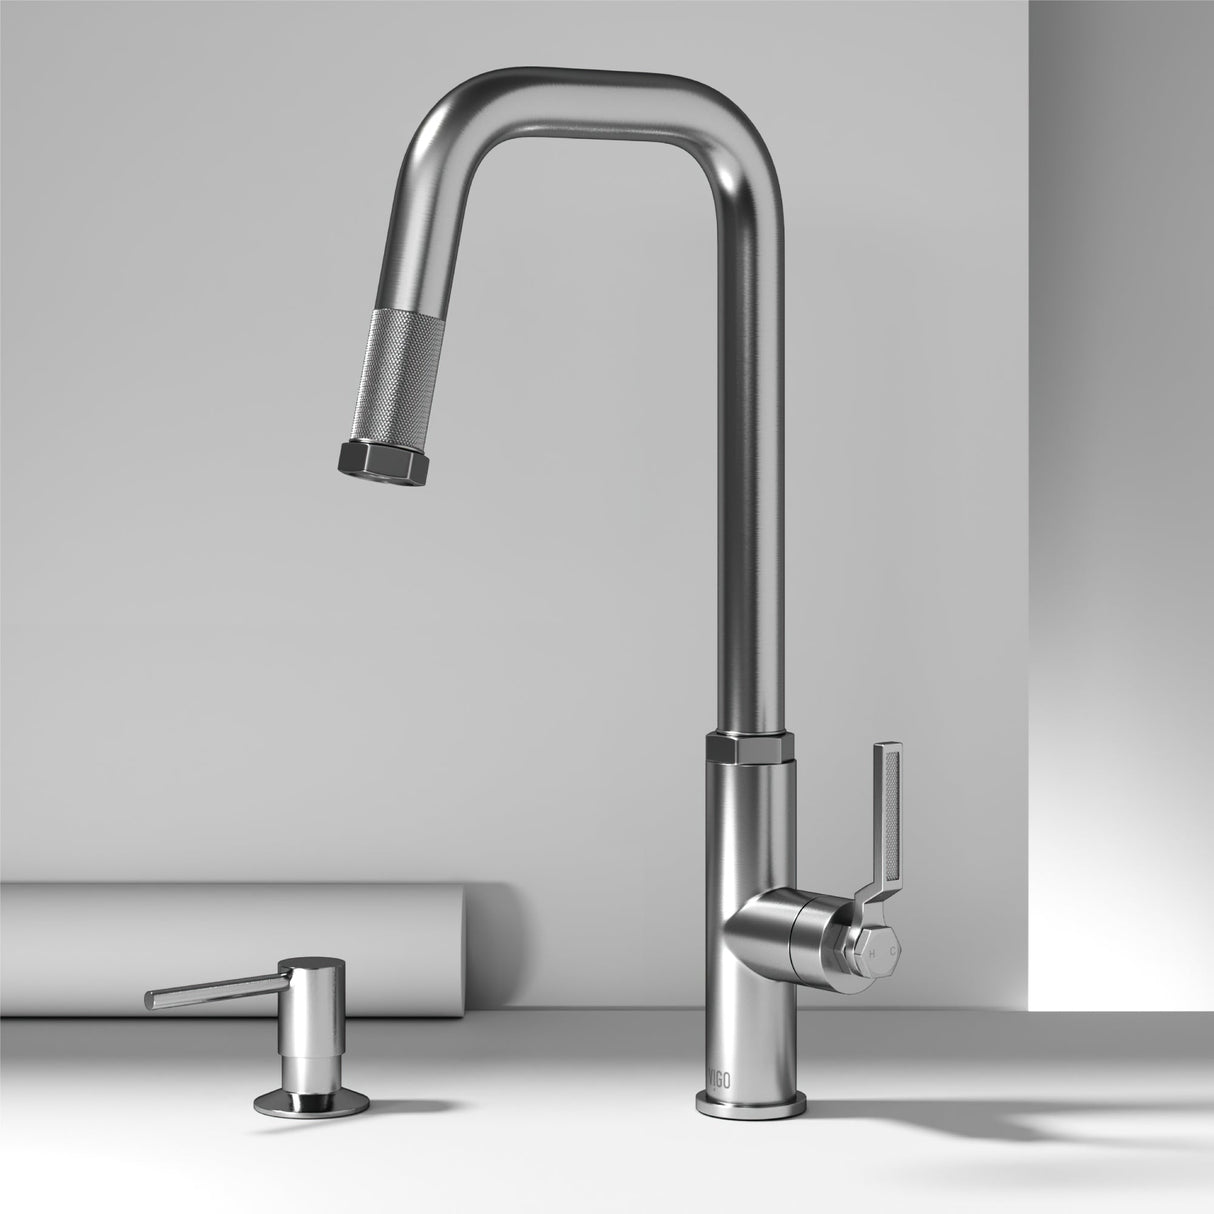 VIGO Hart Angular Kitchen Faucet with Soap Dispenser in Stainless Steel VG02036STK2